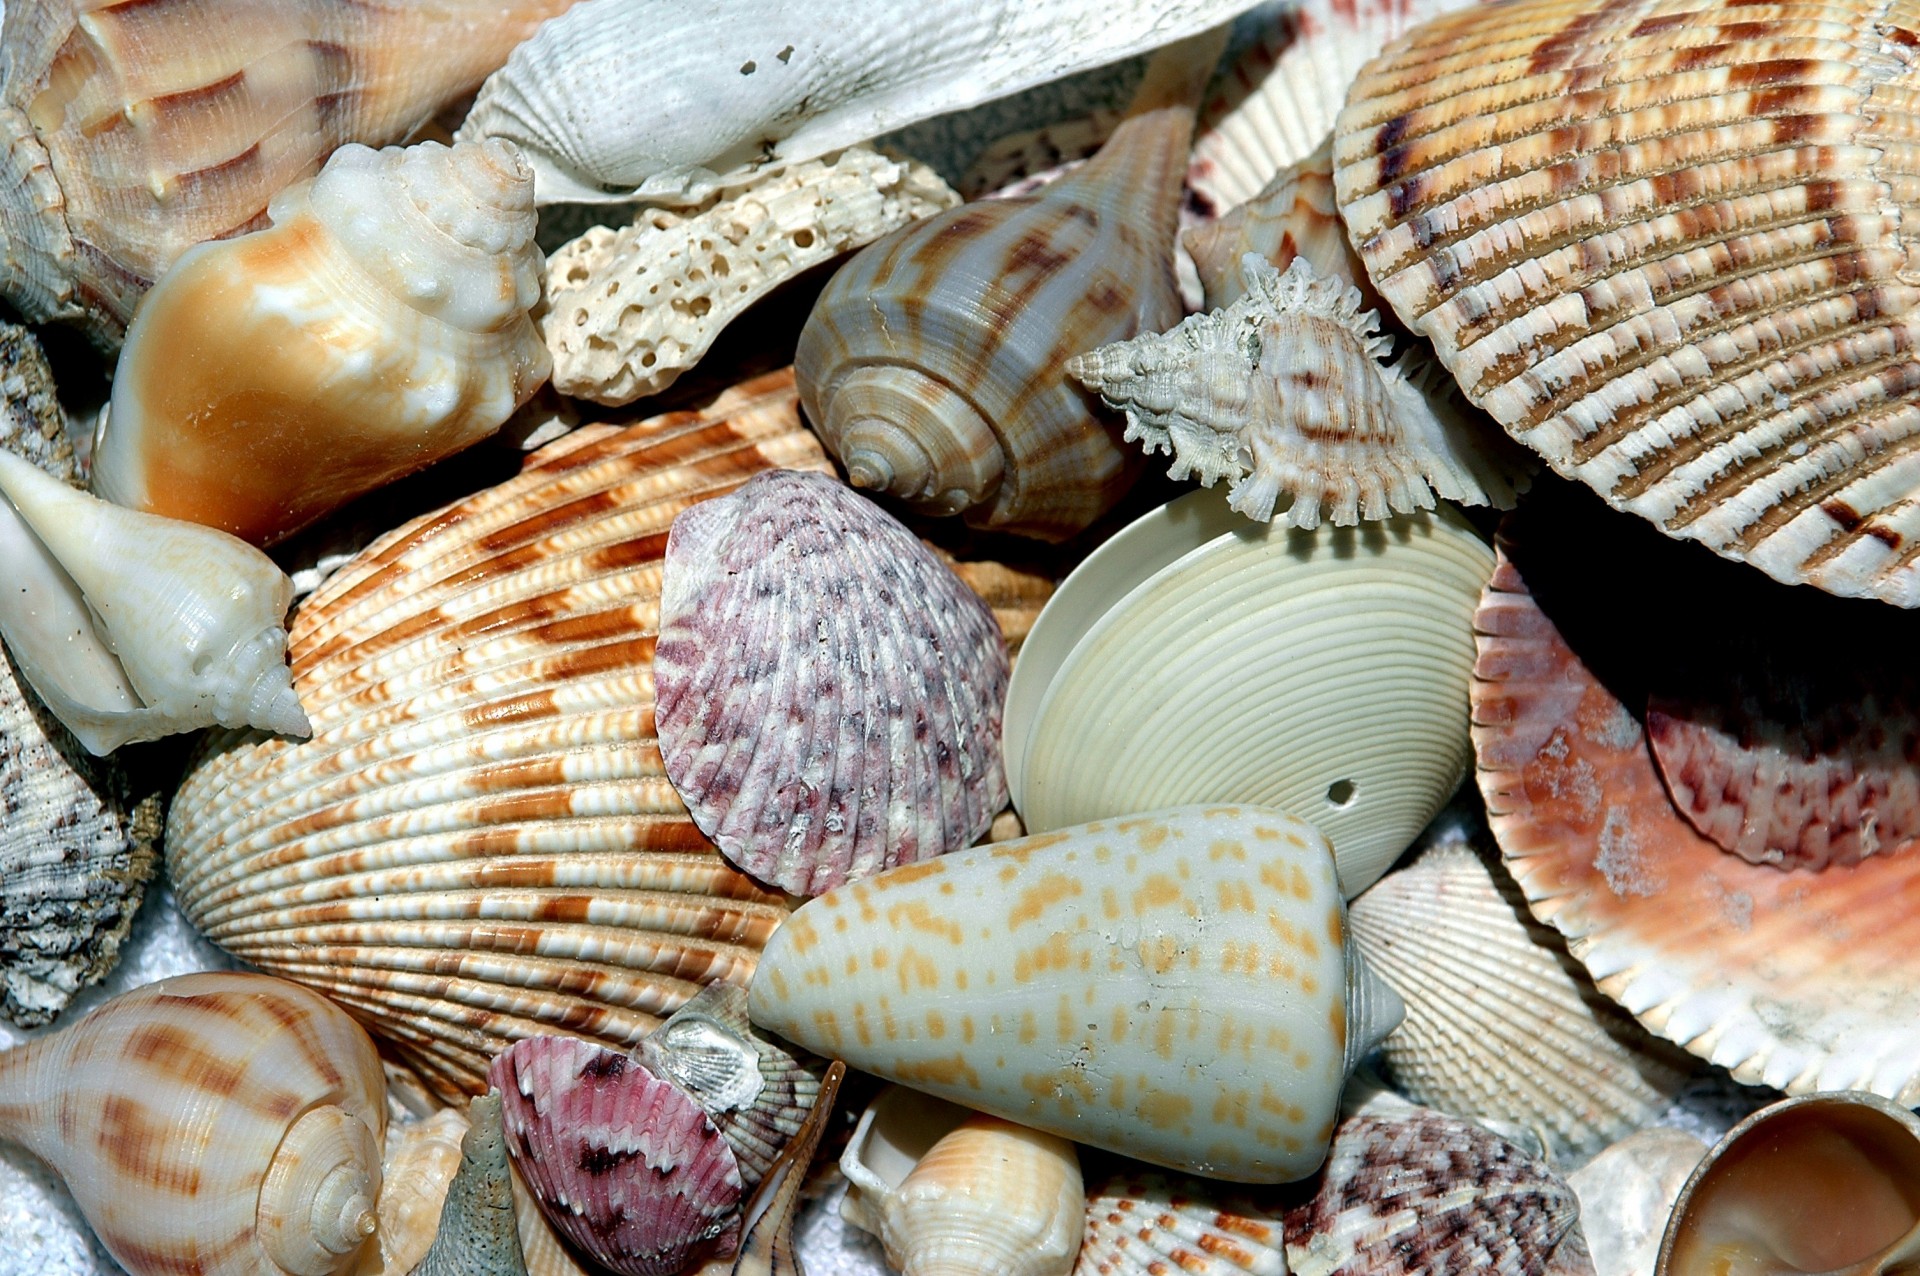 Beach Shells collected at Sanibel Island, Florida